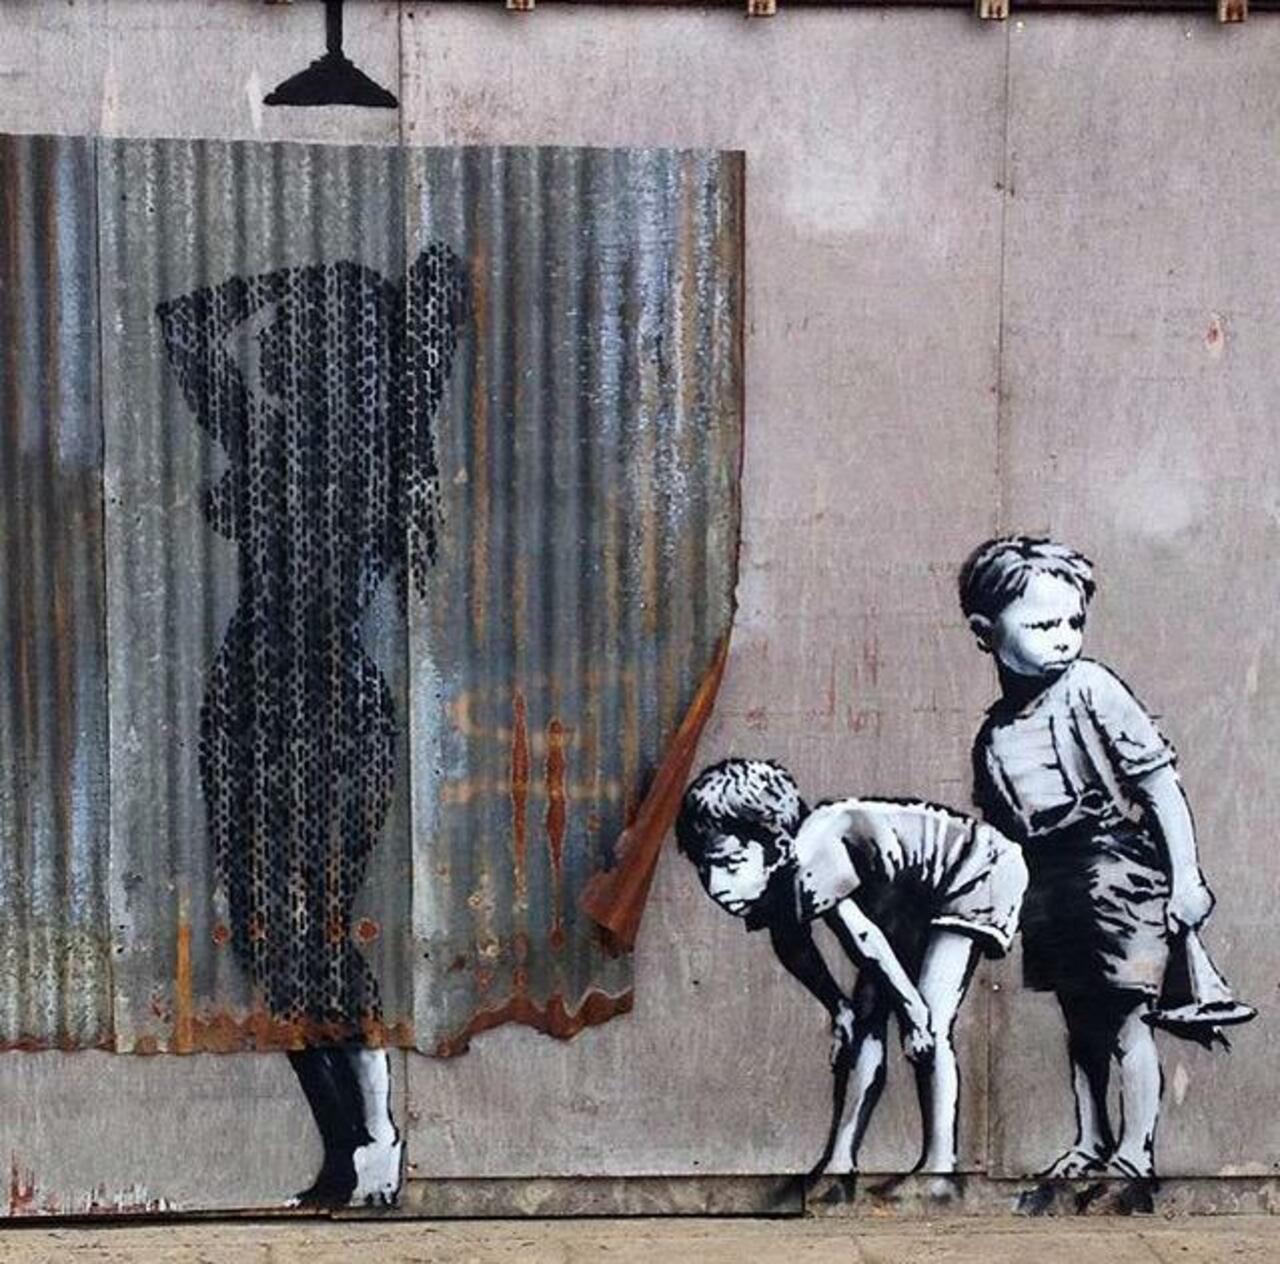 RT @jerome_coumet: #Banksy for #Dismaland 
#streetart #banksy #art #graffiti https://t.co/2q7m8Q0wGf
Via @GoogleStreetArt